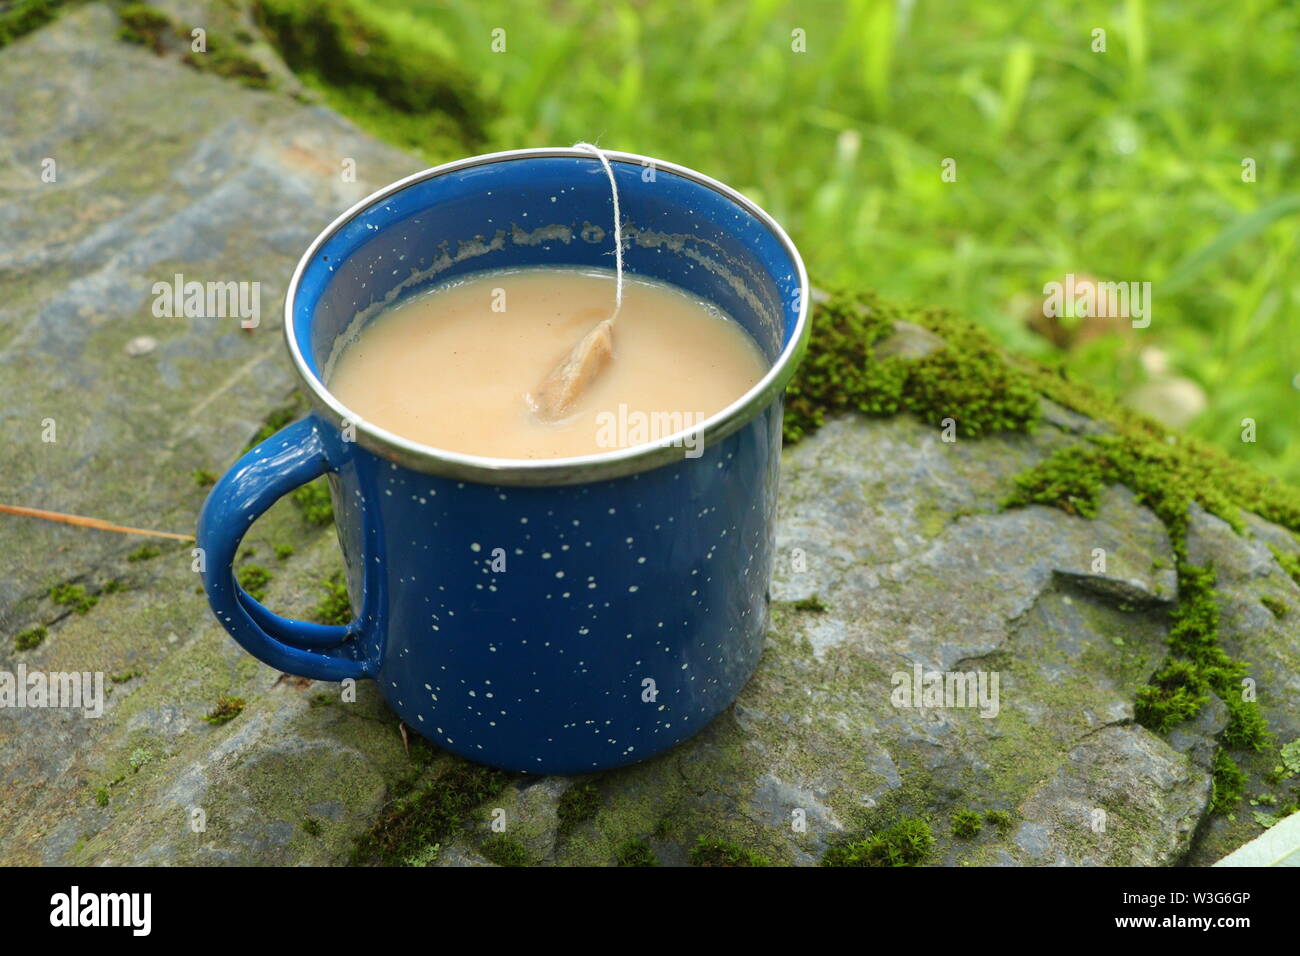 Tea Latte Chai London Fog in a blue enamel Mug on a rock, Outdoors, Camping, Picnic Stock Photo